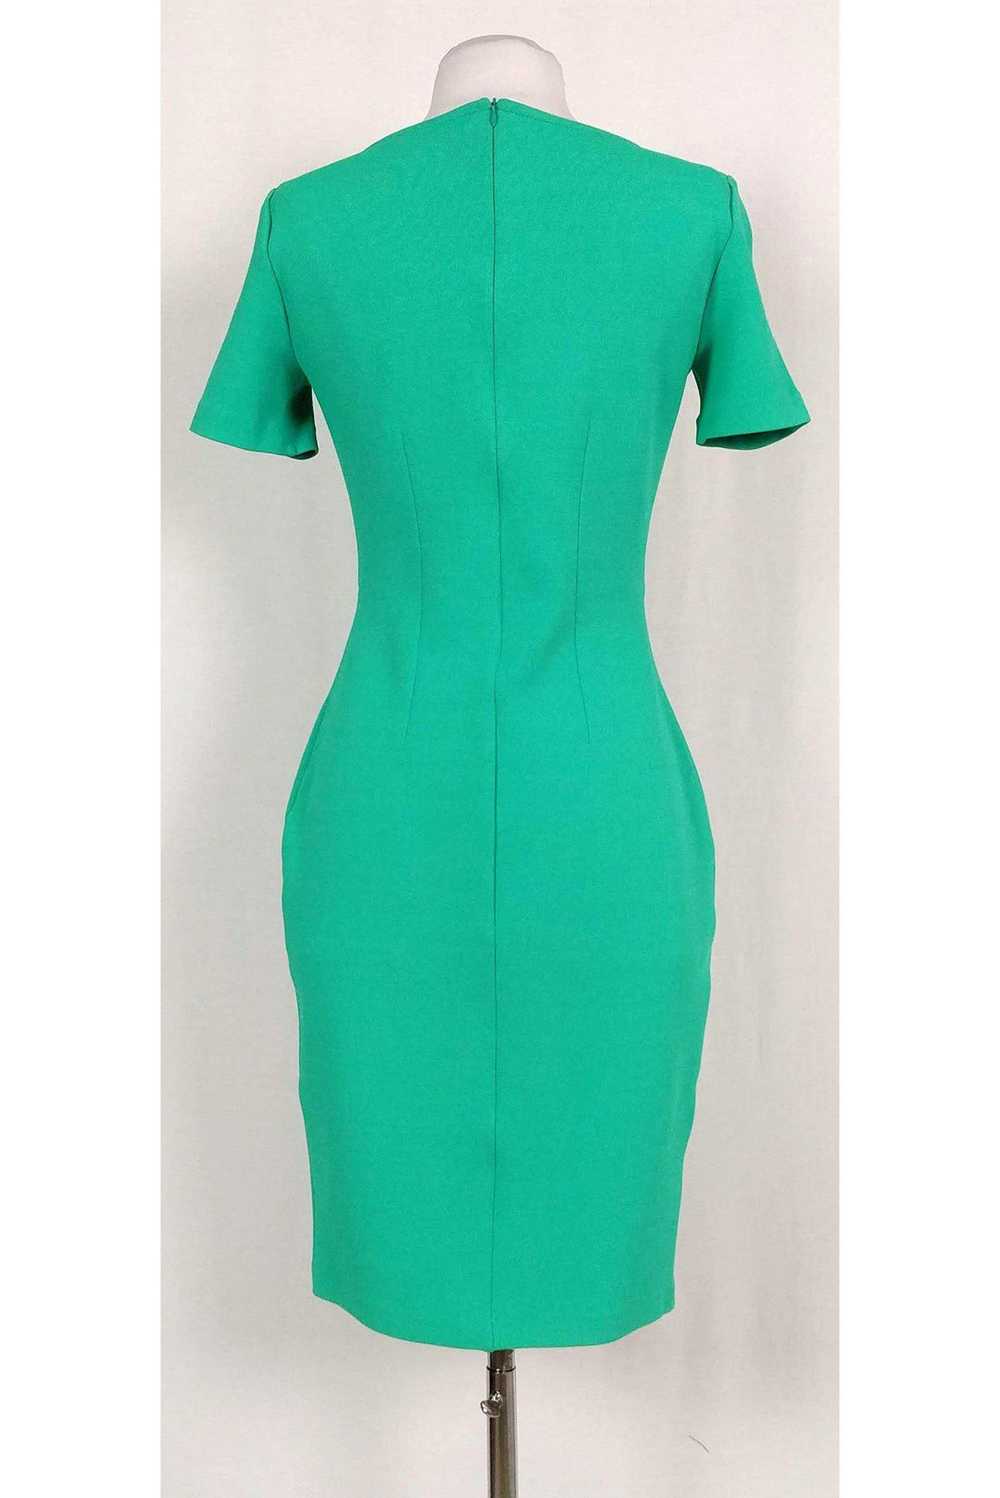 St. John - Seafoam Green Fitted Dress Sz 4 - image 3